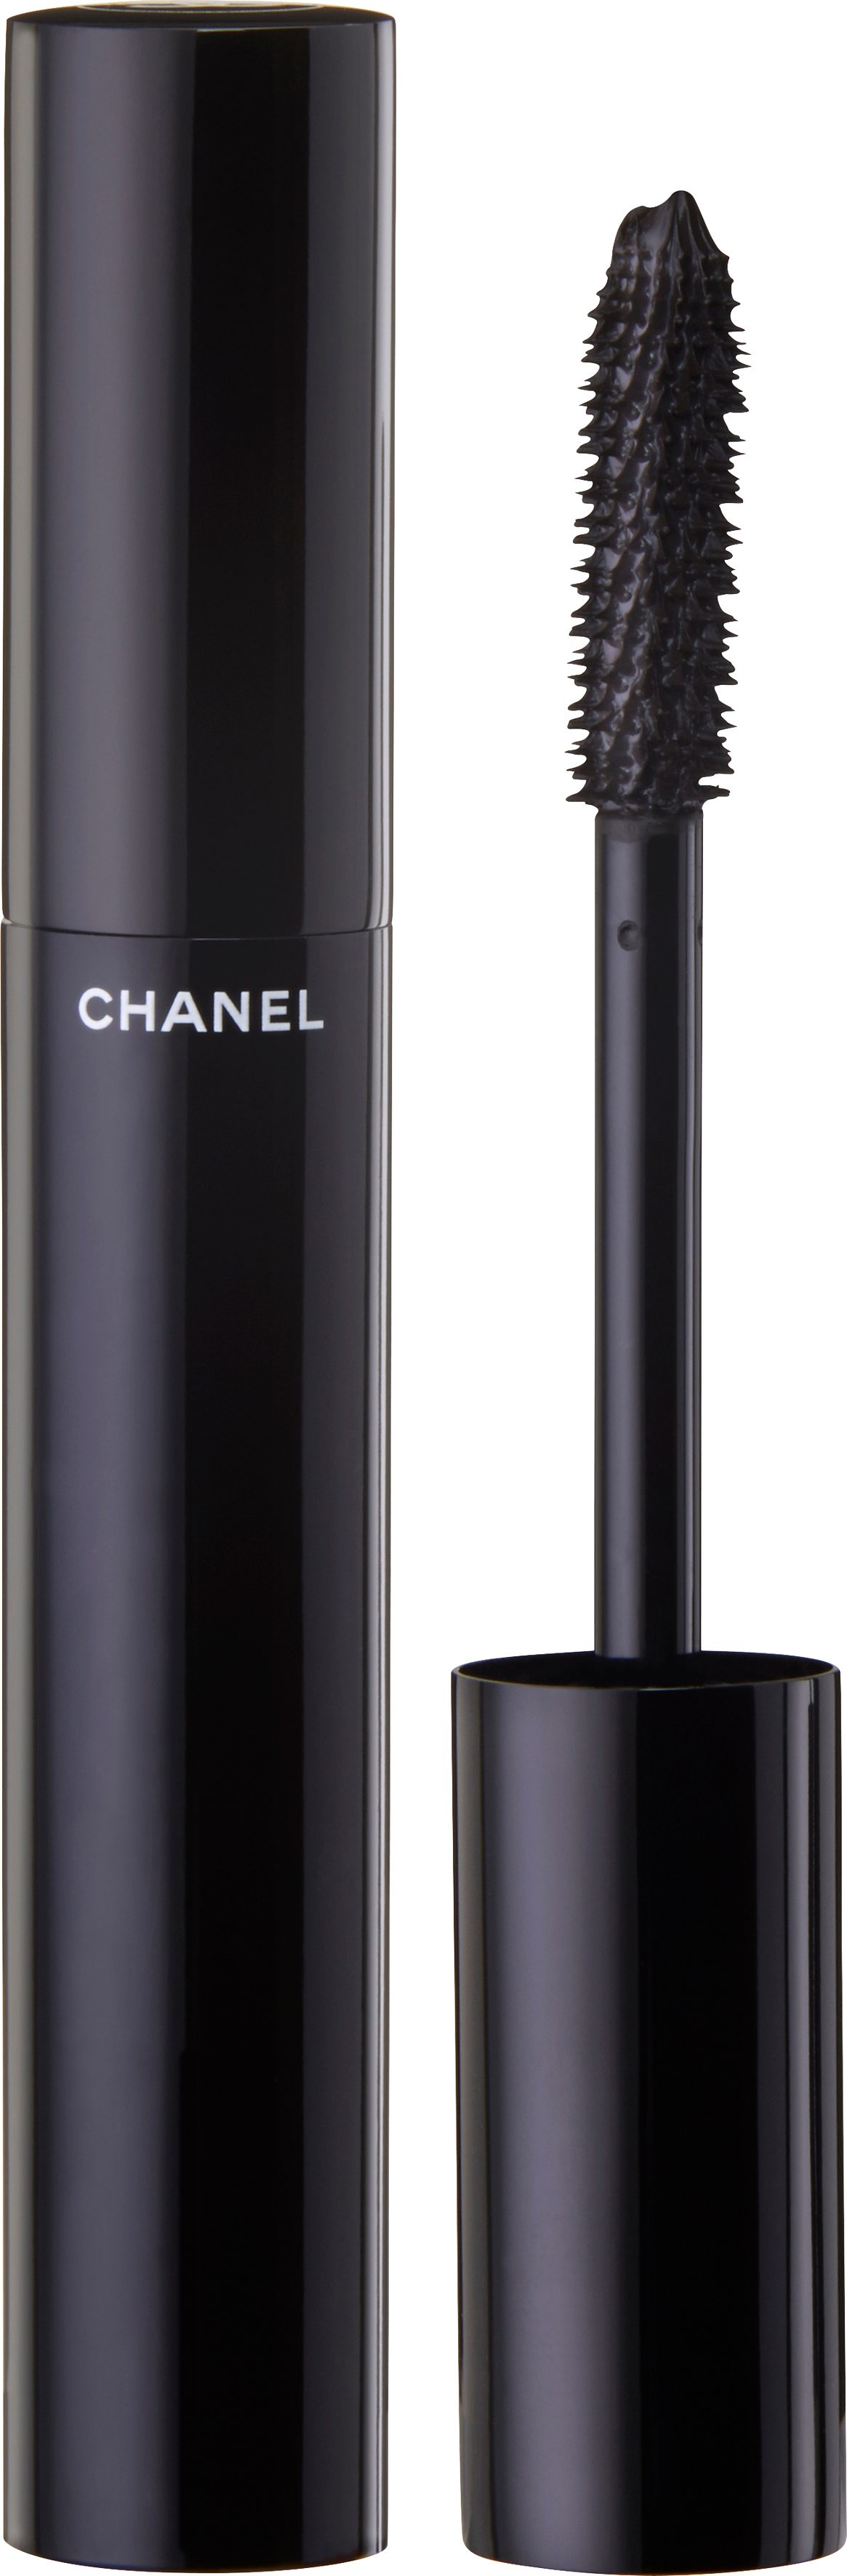 CHANEL Mascara »Le Volume de Chanel«, Innovative Bürste online kaufen | OTTO